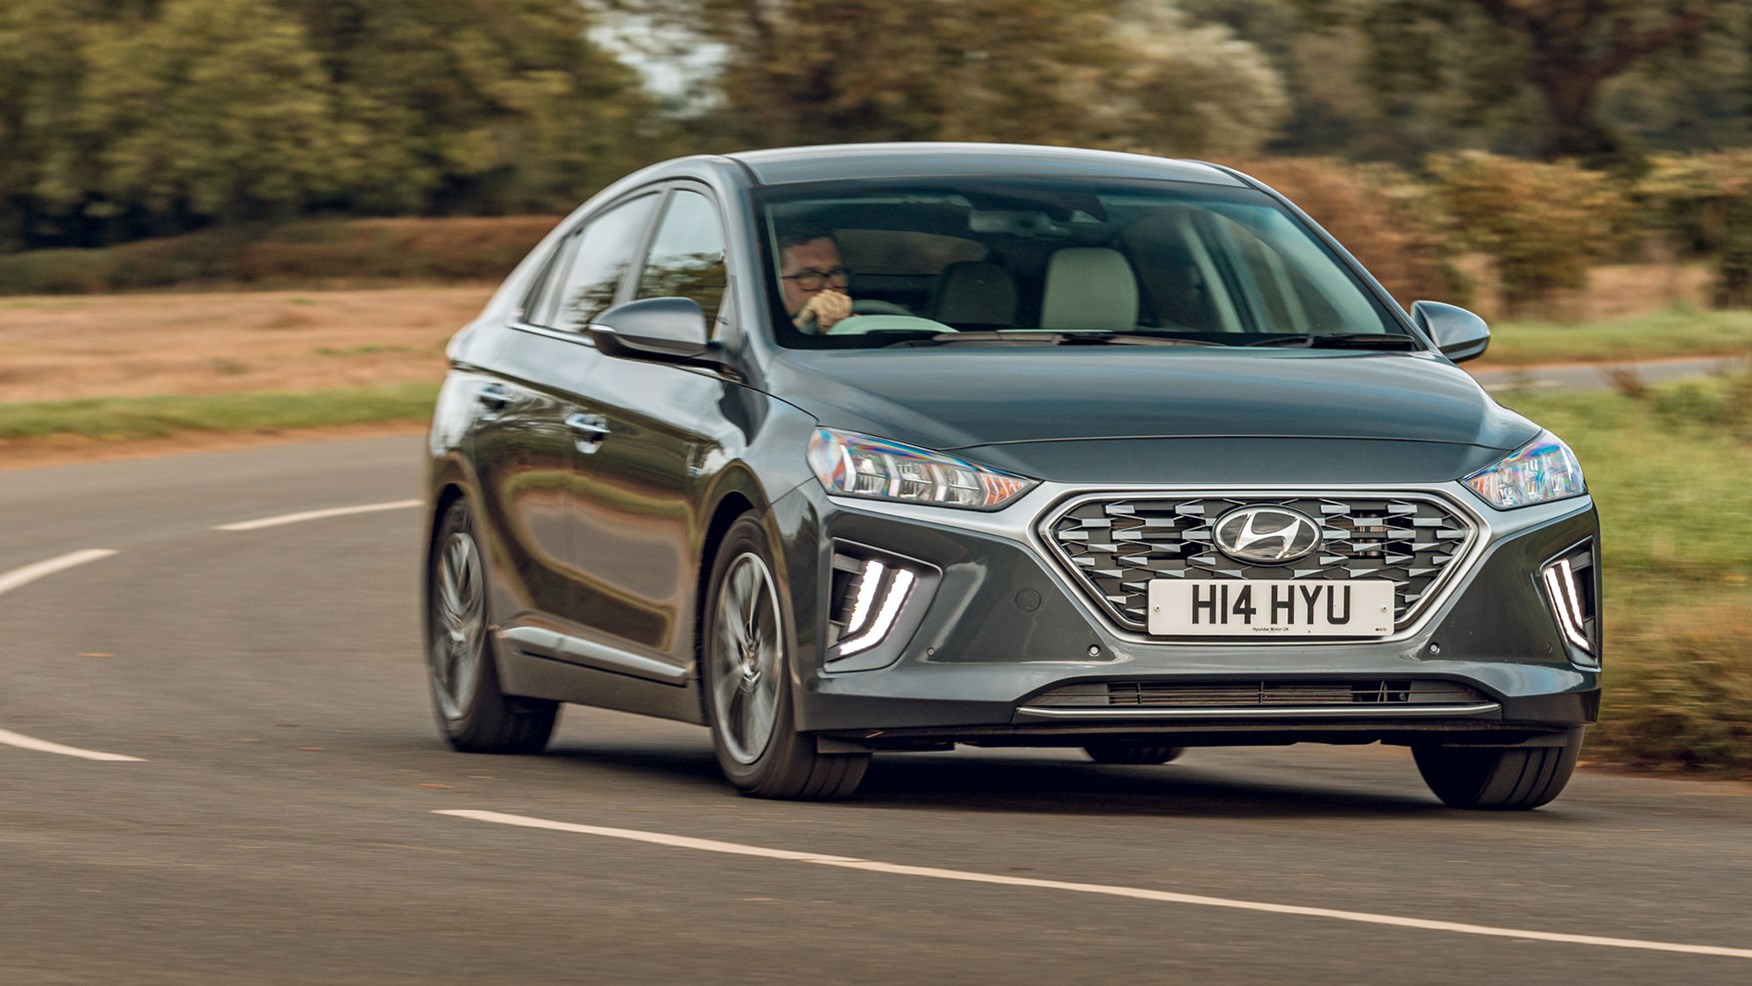 2019 Hyundai Tucson 48V Mild Hybrid Review - Practical Without